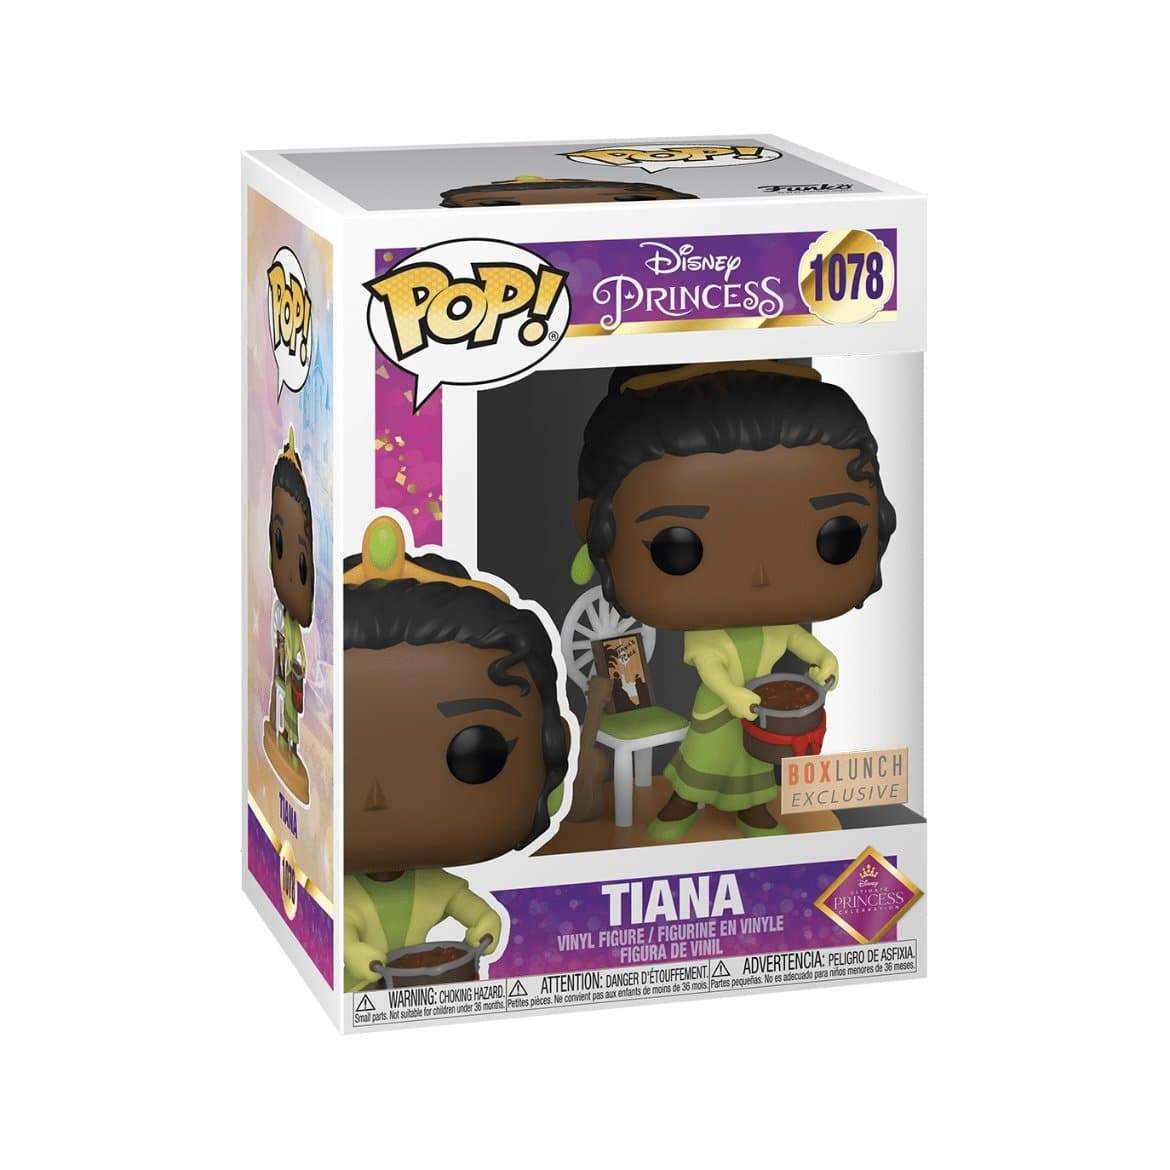 Disney Princesses - Tiana (Box Lunch Exclusive) PREORDER - Pop Figures | Funko | Pop Funko | Funko Pop